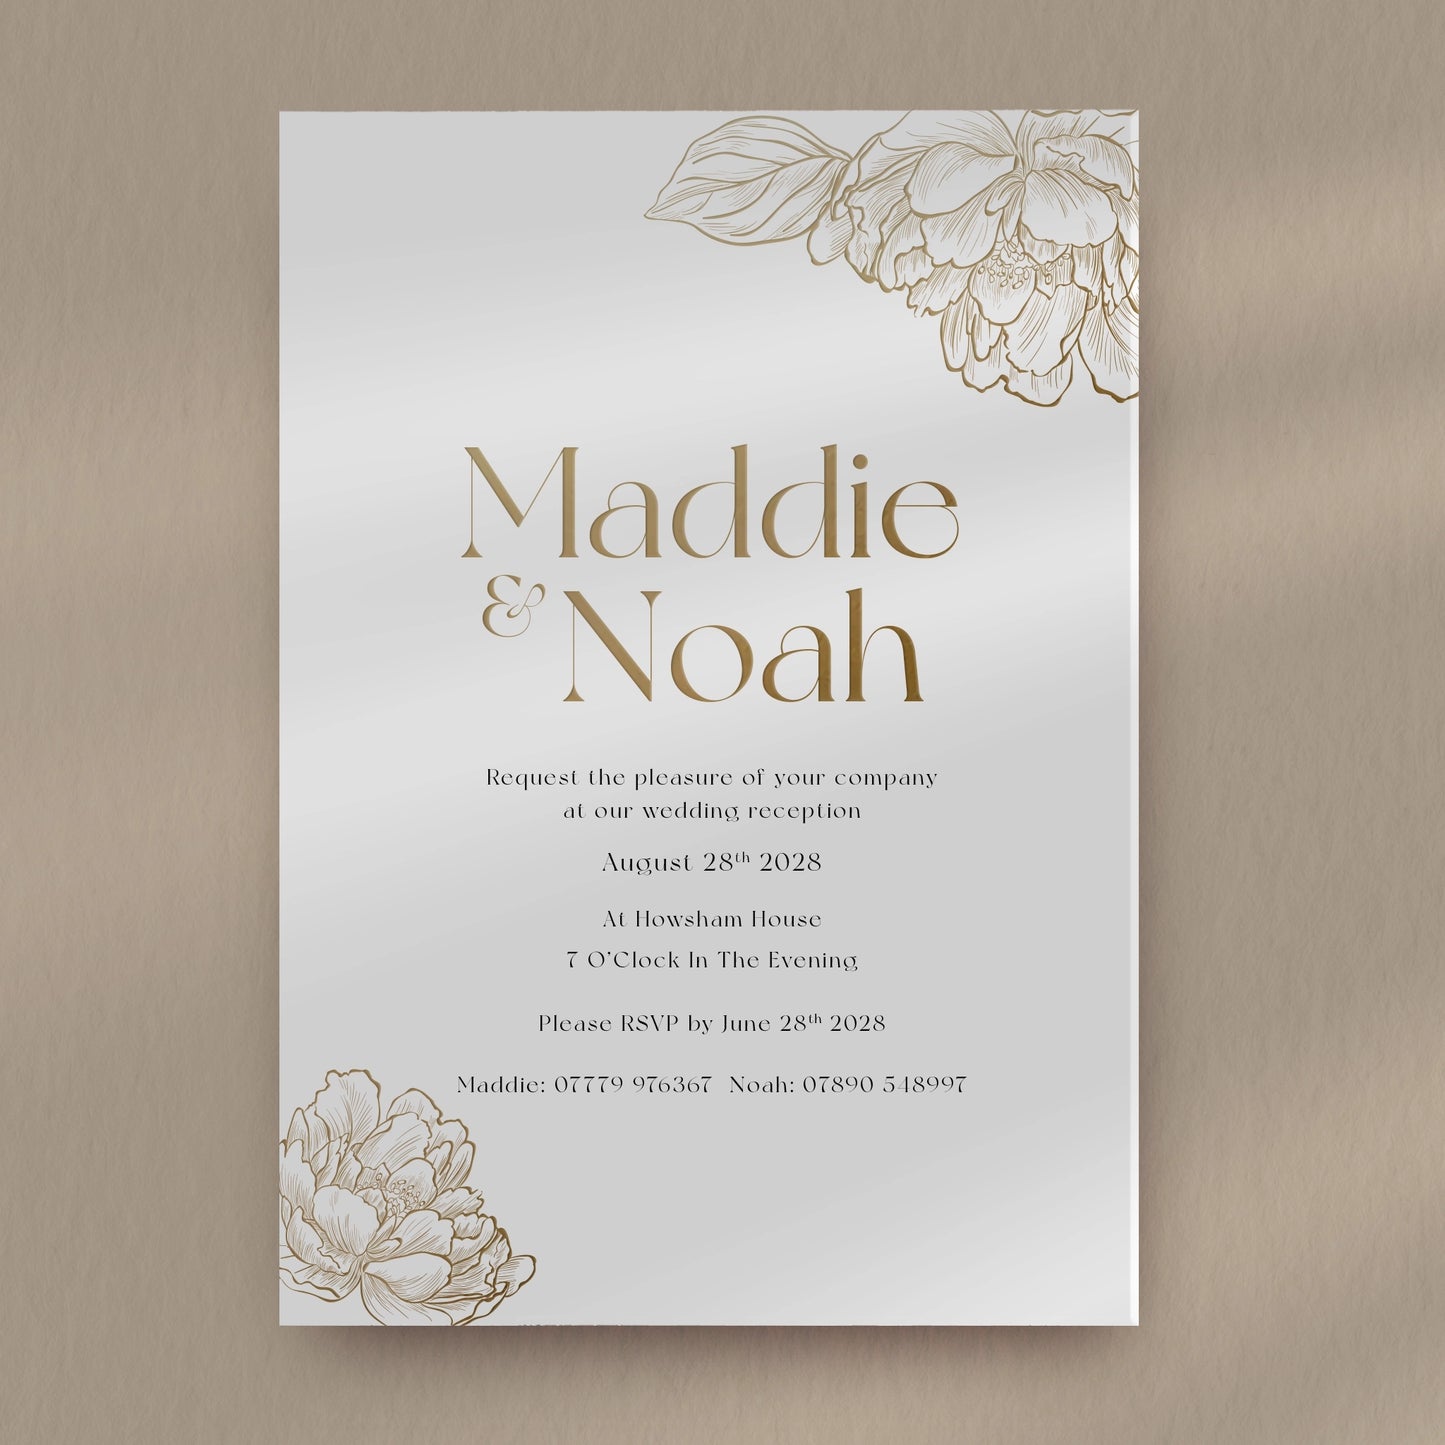 Evening Invitation Sample  Ivy and Gold Wedding Stationery Maddie  